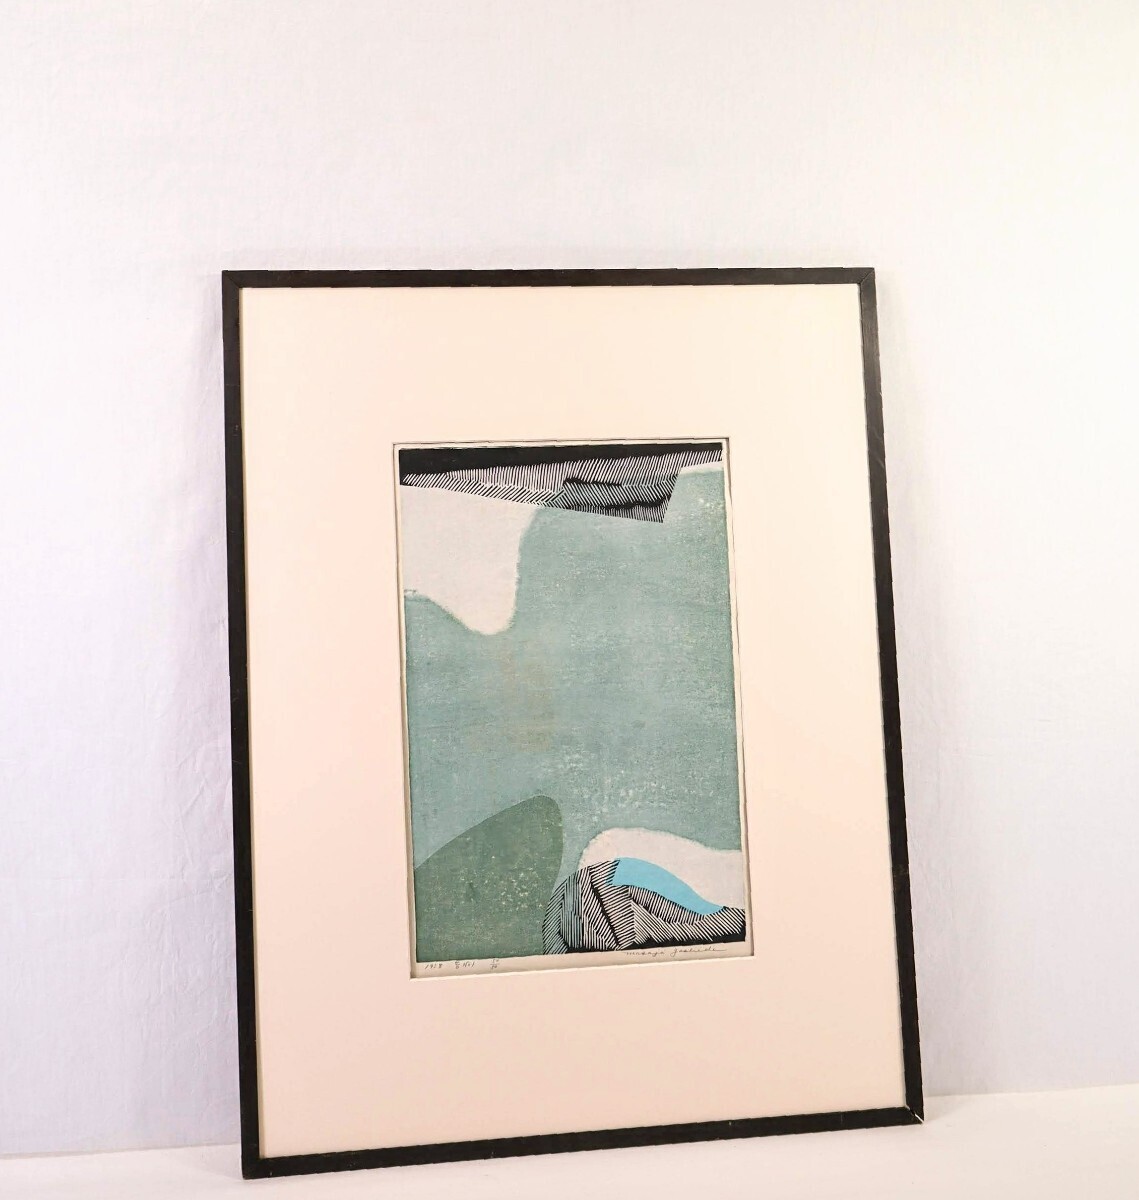 真作 吉田政次 1958年銅版画「苔 No.1」画寸 28.5cm×43cm 和歌山県出身 日本版画協会会員 心象描写による抽象版画で注目、活躍した 8801_画像8